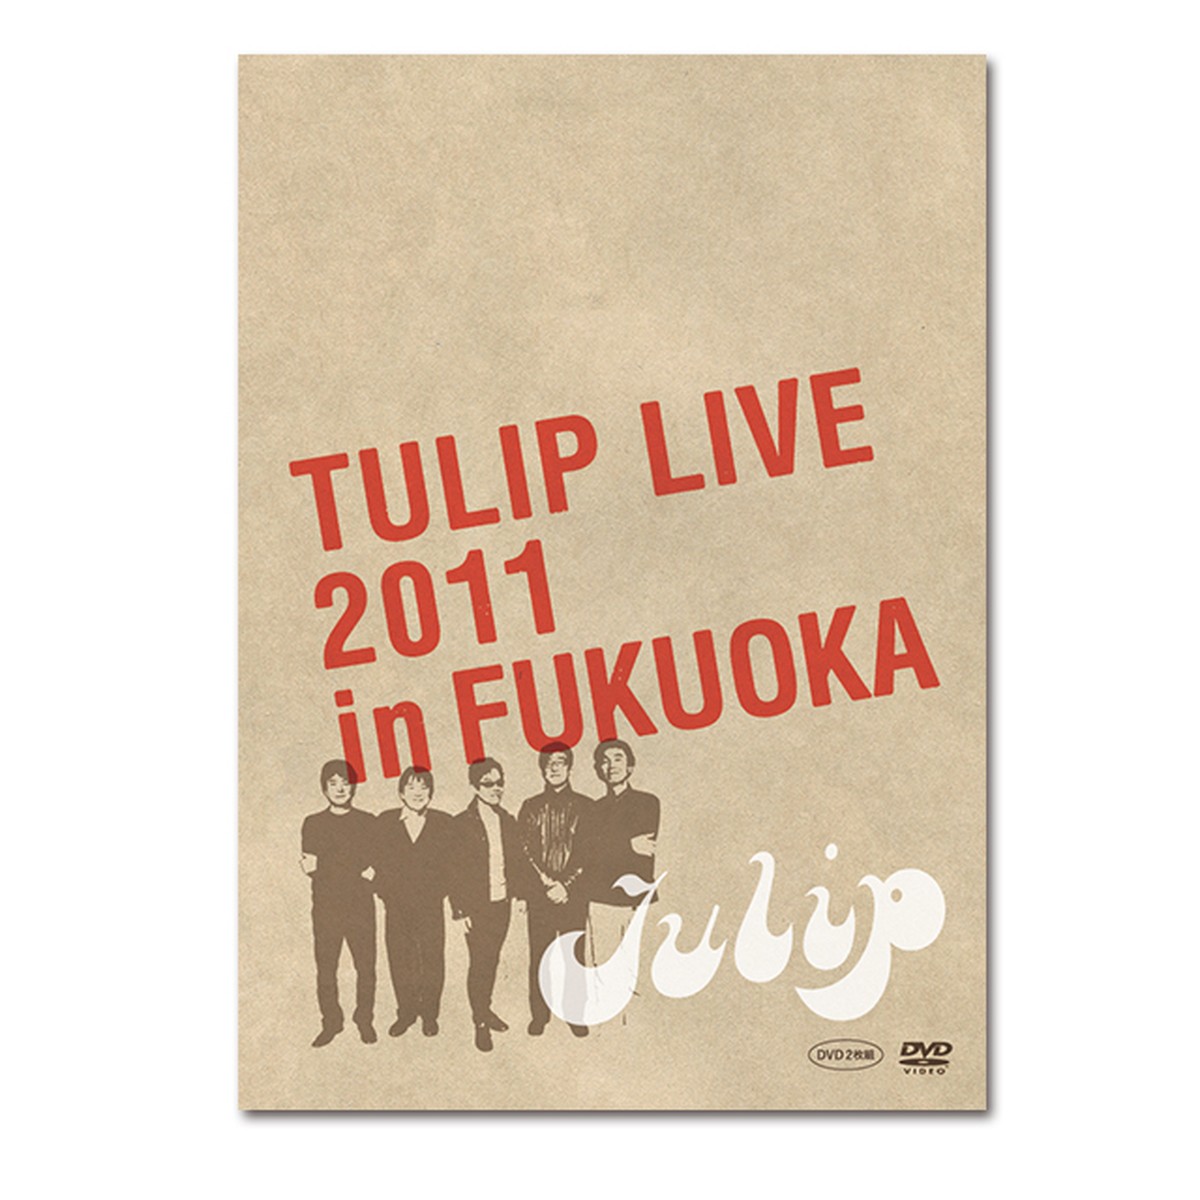 Tulip Live 11 In福岡 財津和夫オフィシャルグッズ